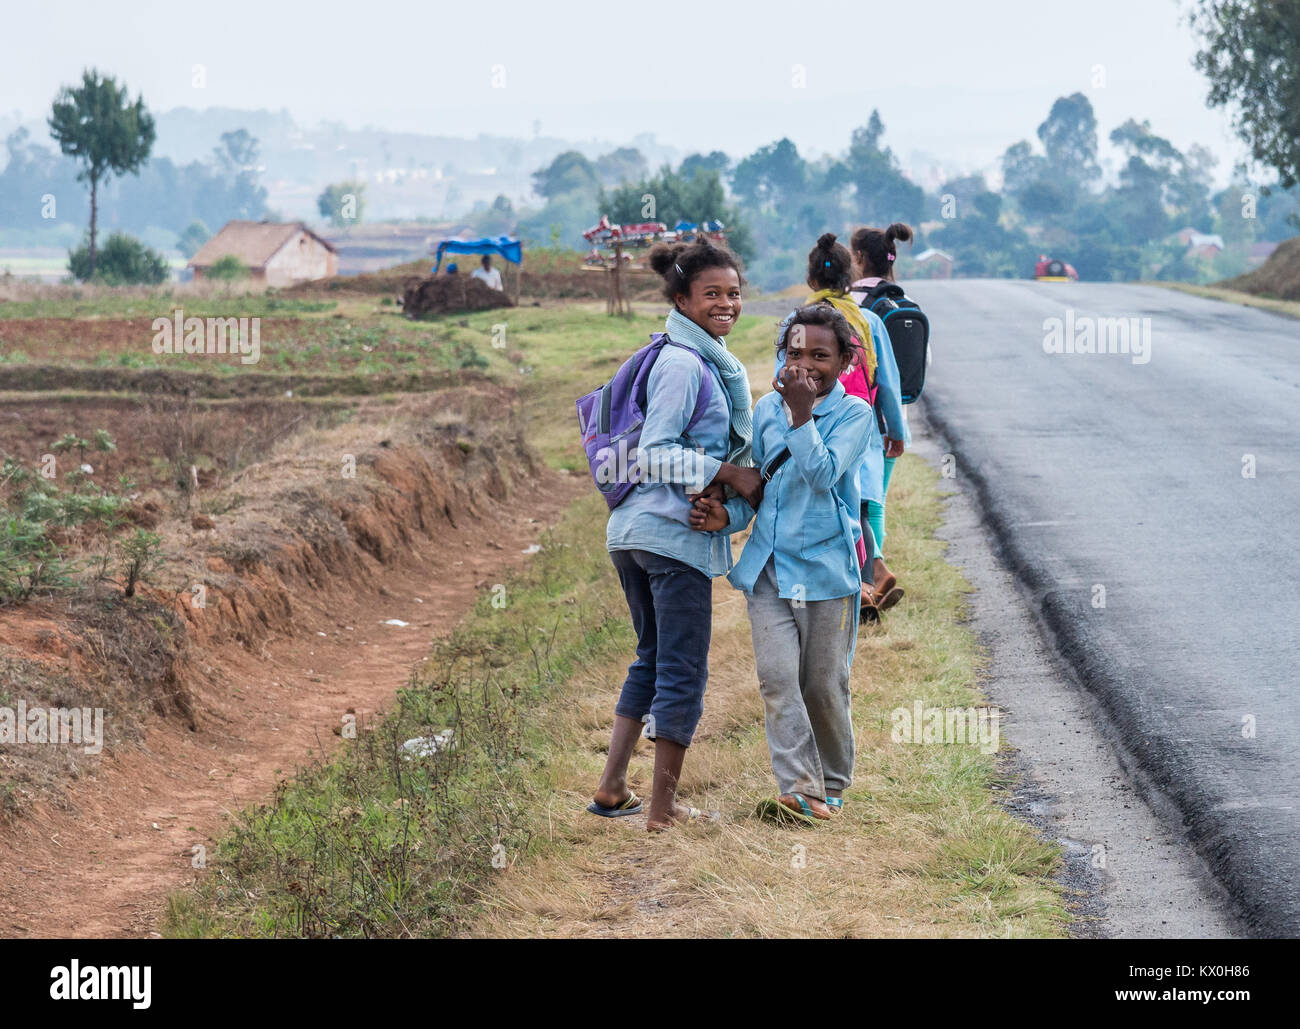 School girls in uniform walk on the side of road. Madagascar, Africa. Stock Photo